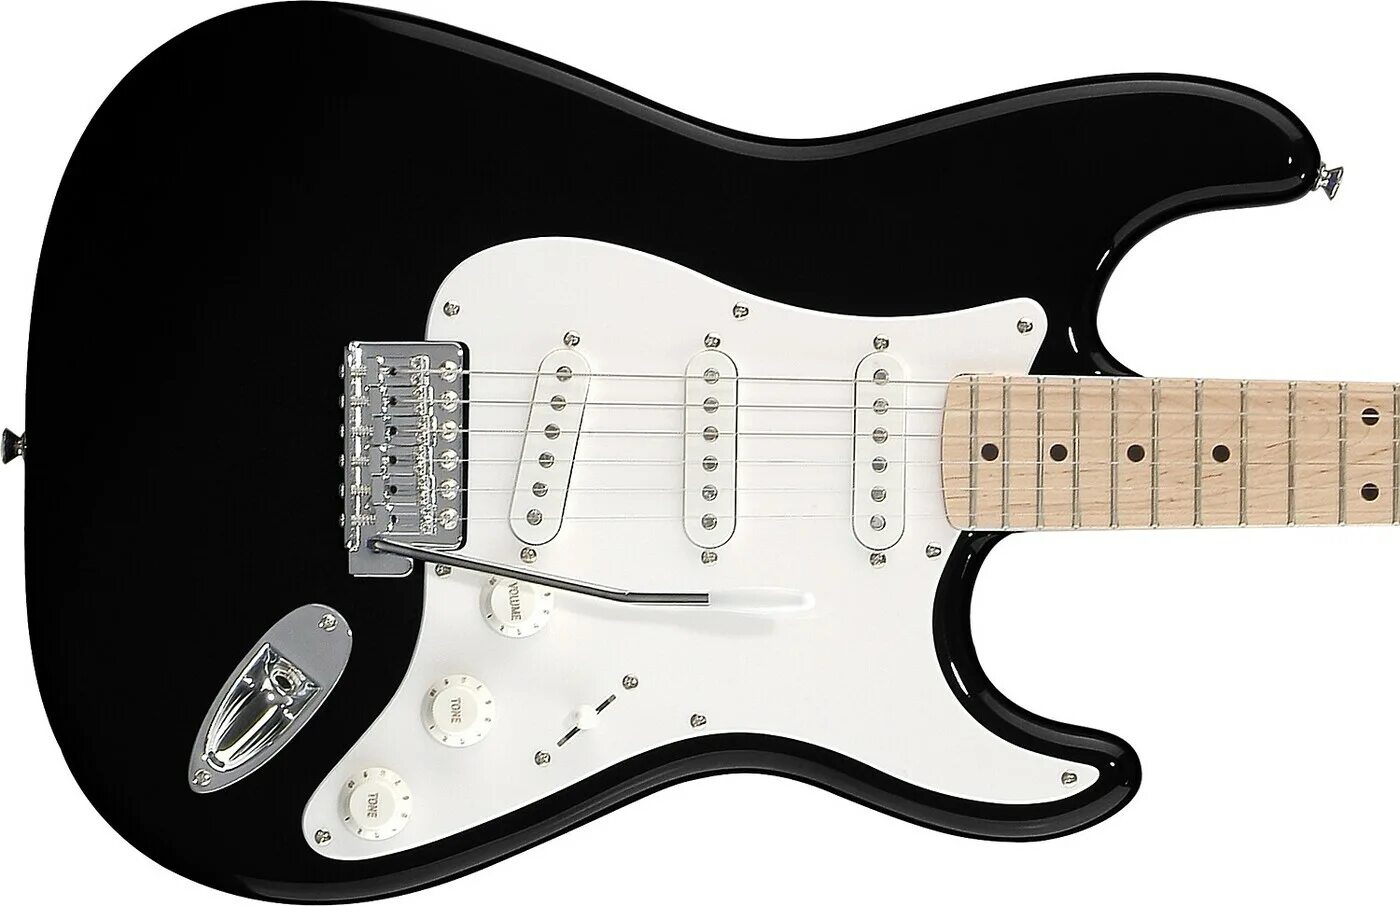 Squier stratocaster купить. Гитара Fender Squier Stratocaster Affinity. Squier Affinity Stratocaster Black. Squier Affinity. Электрогитара Fender Squier Affinity Stratocaster MN OLW.